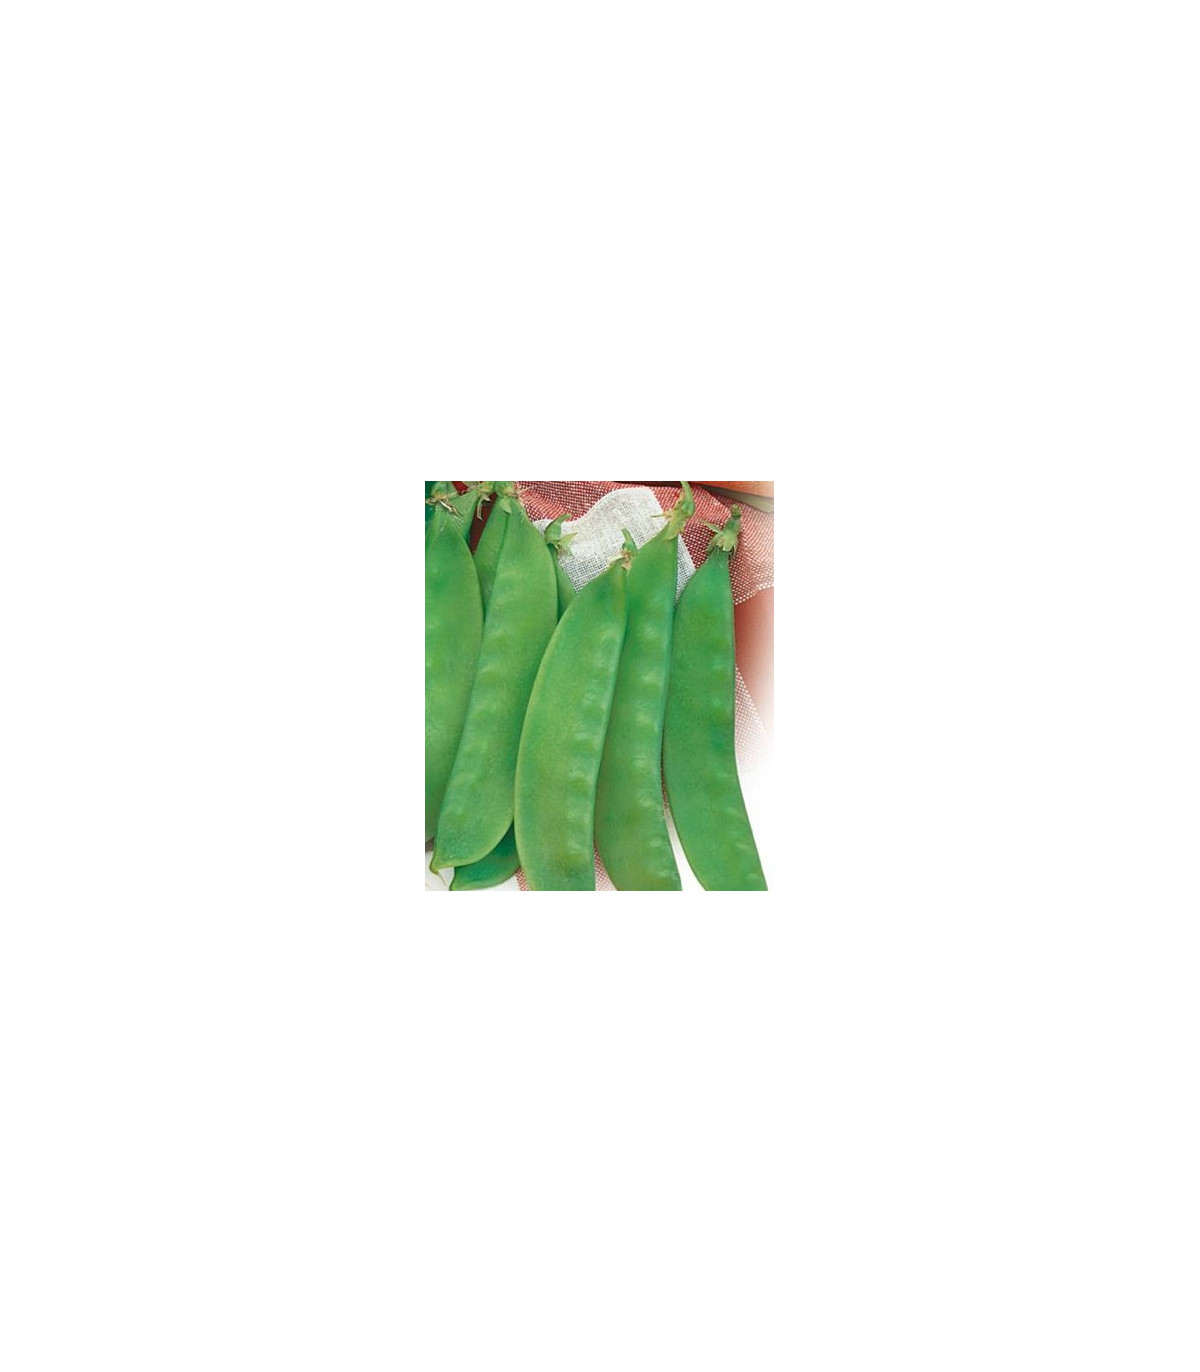 Hrách cukrový - Oregon - Pisum sativum - semena hrášku - 60 ks